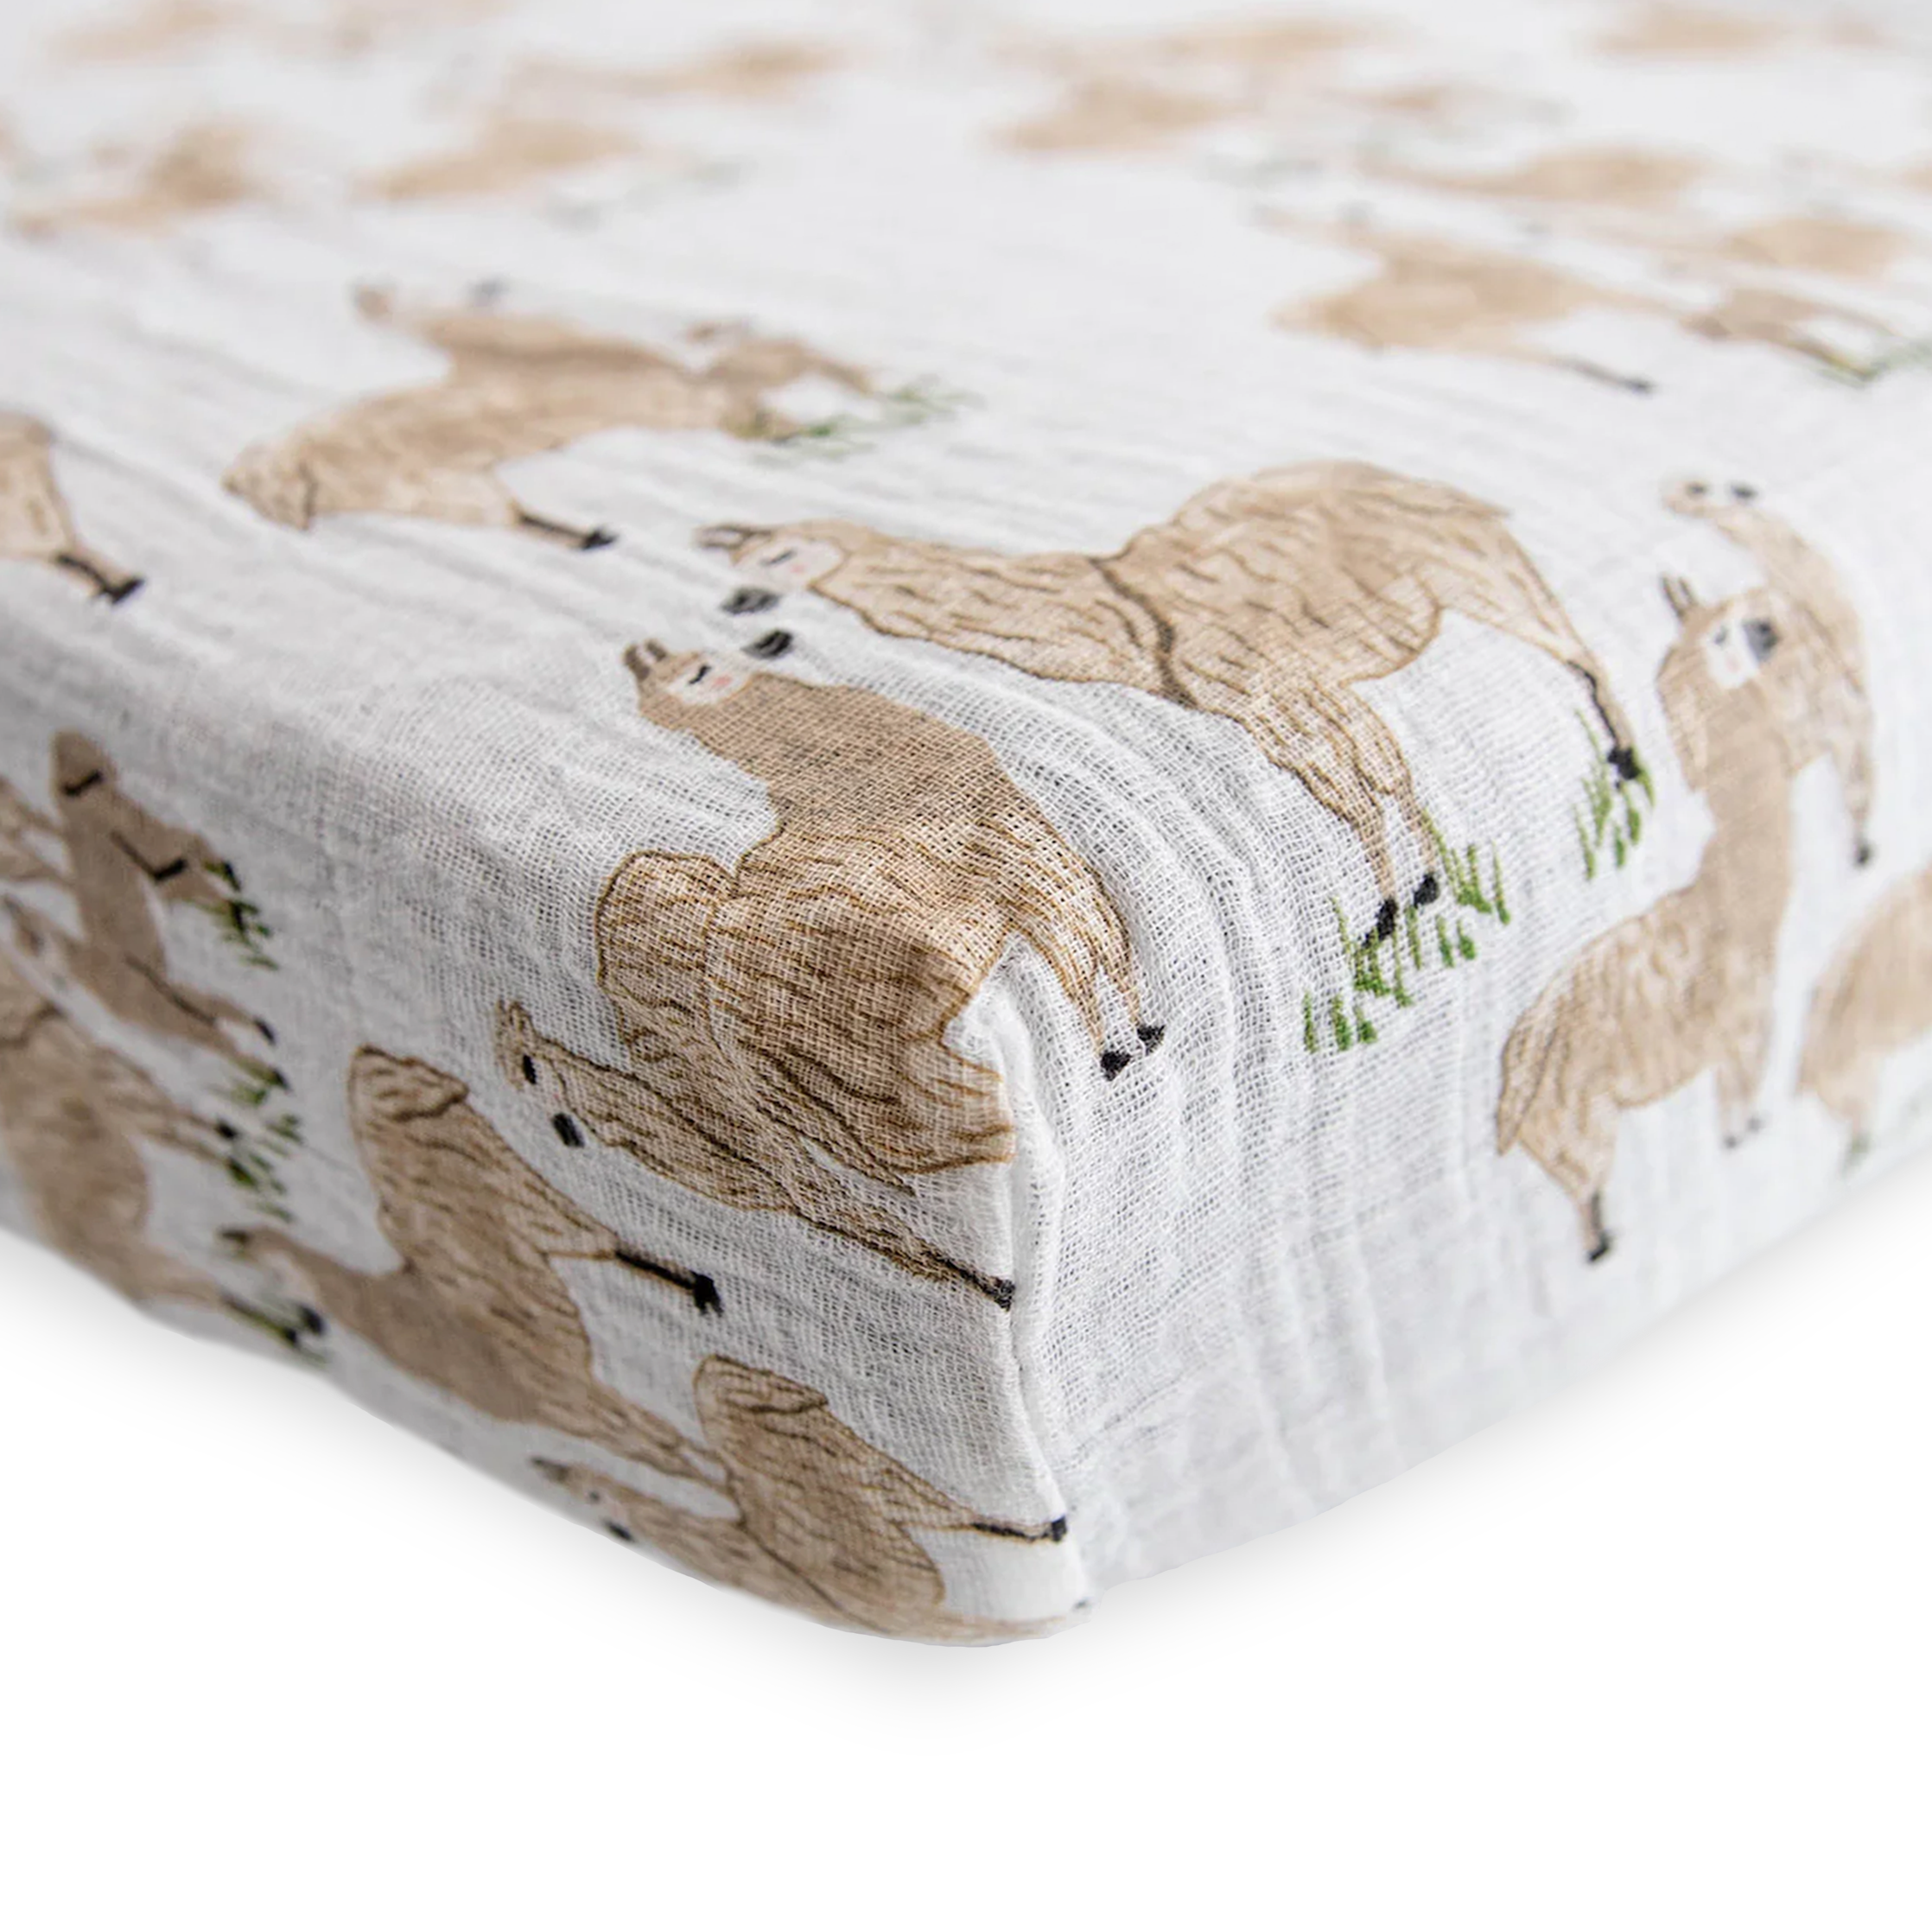 Cotton Muslin Crib Sheet - Llama Llama